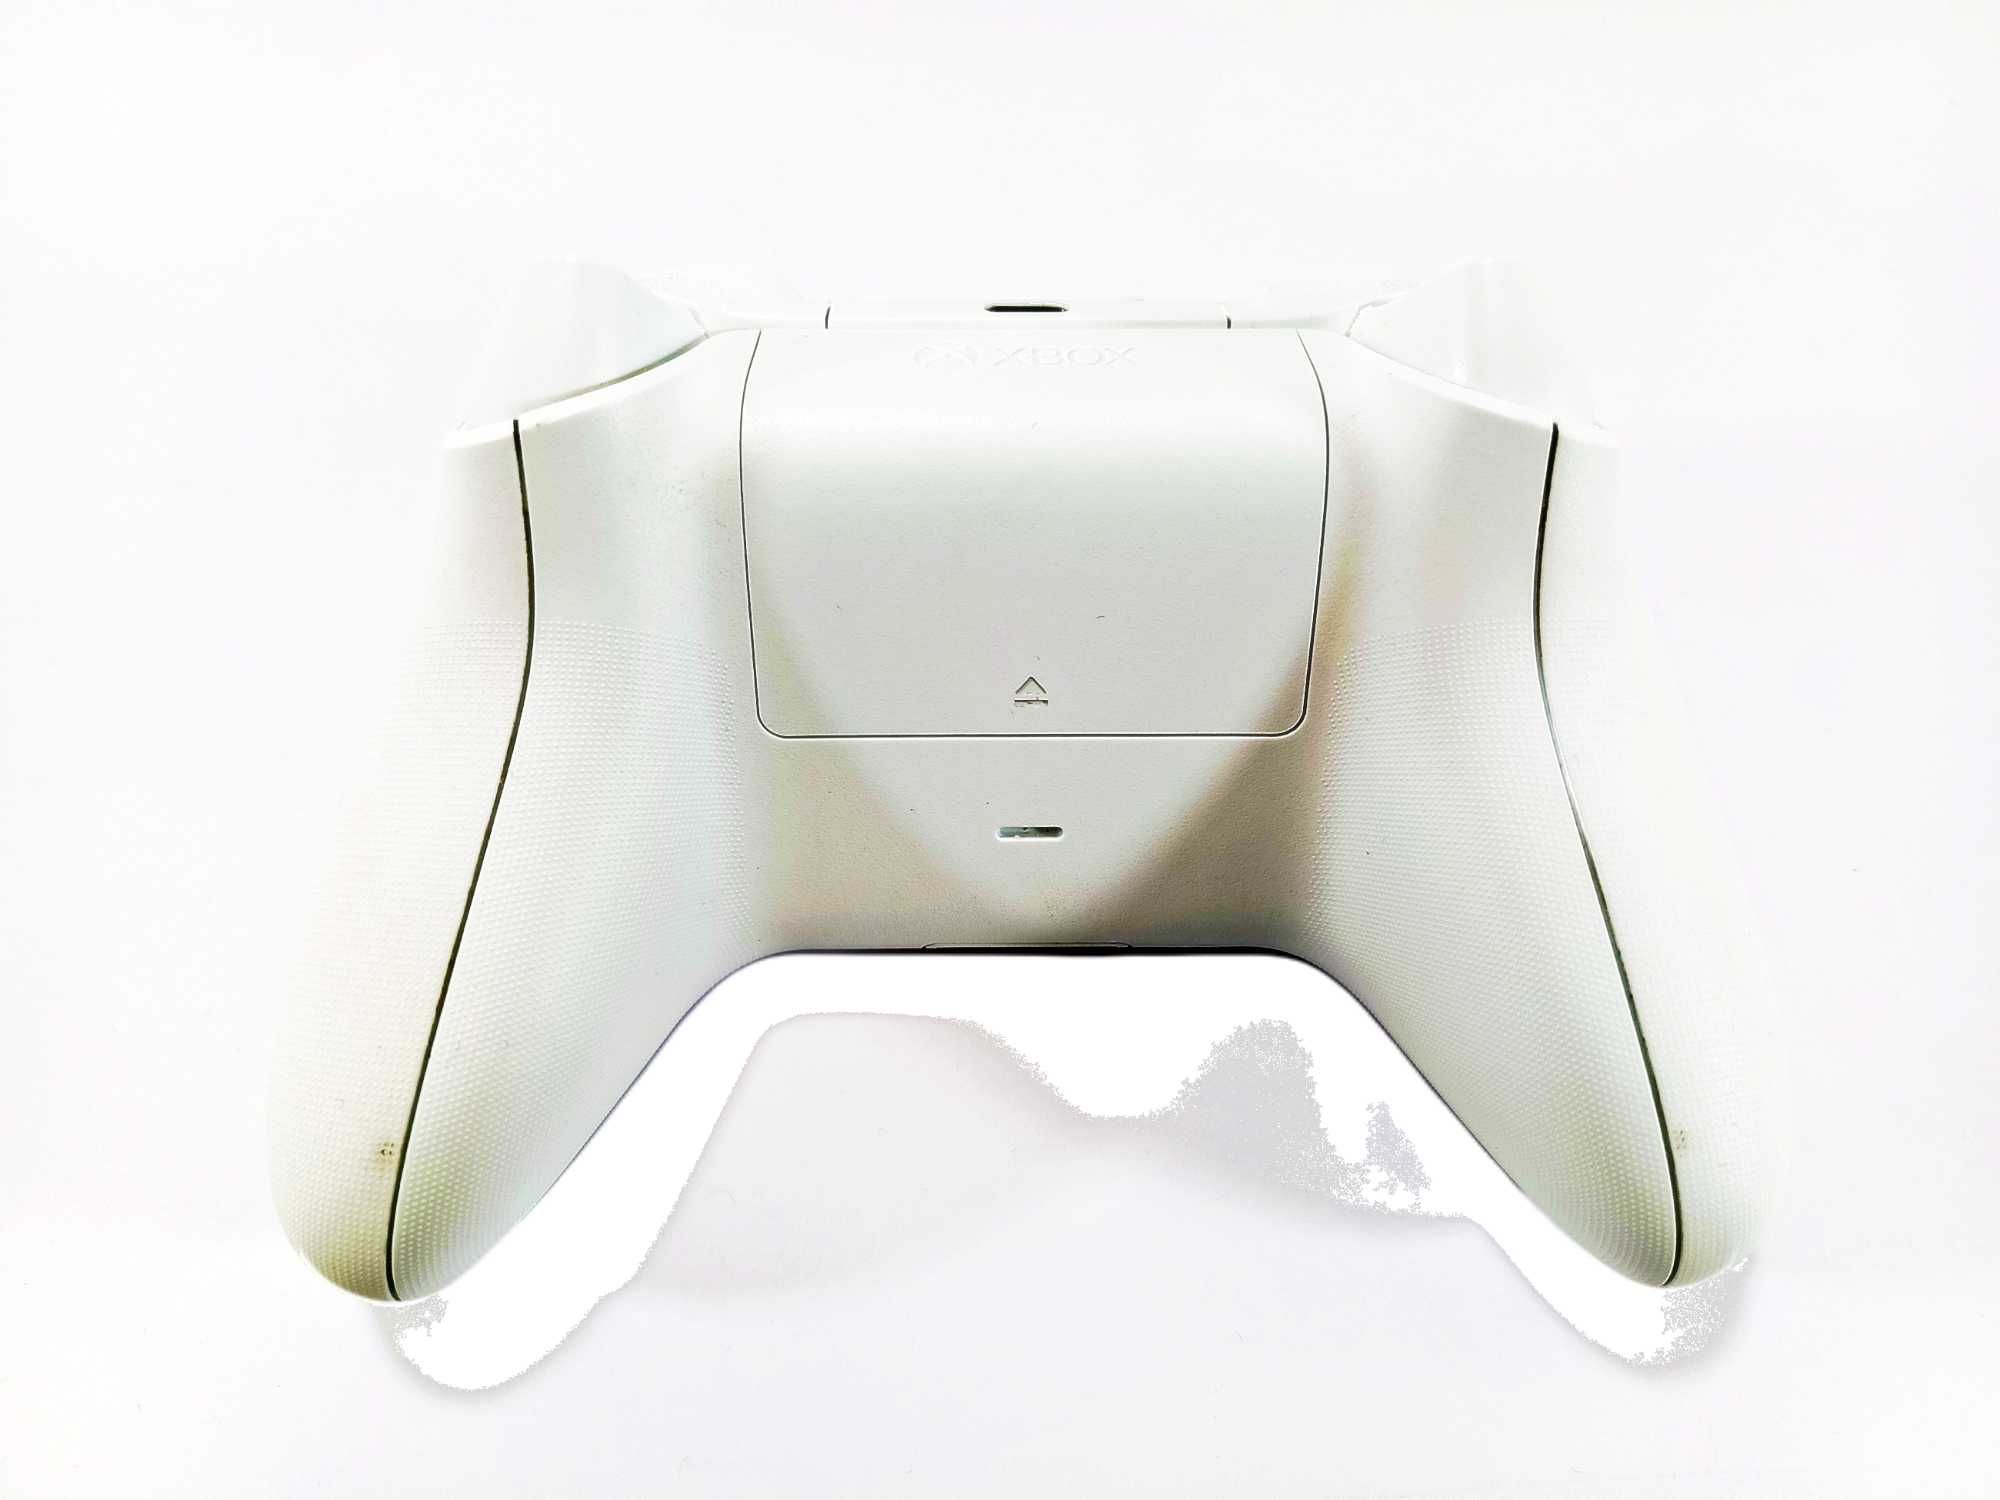 Pad kontroler biały do konsol Xbox Series s/x